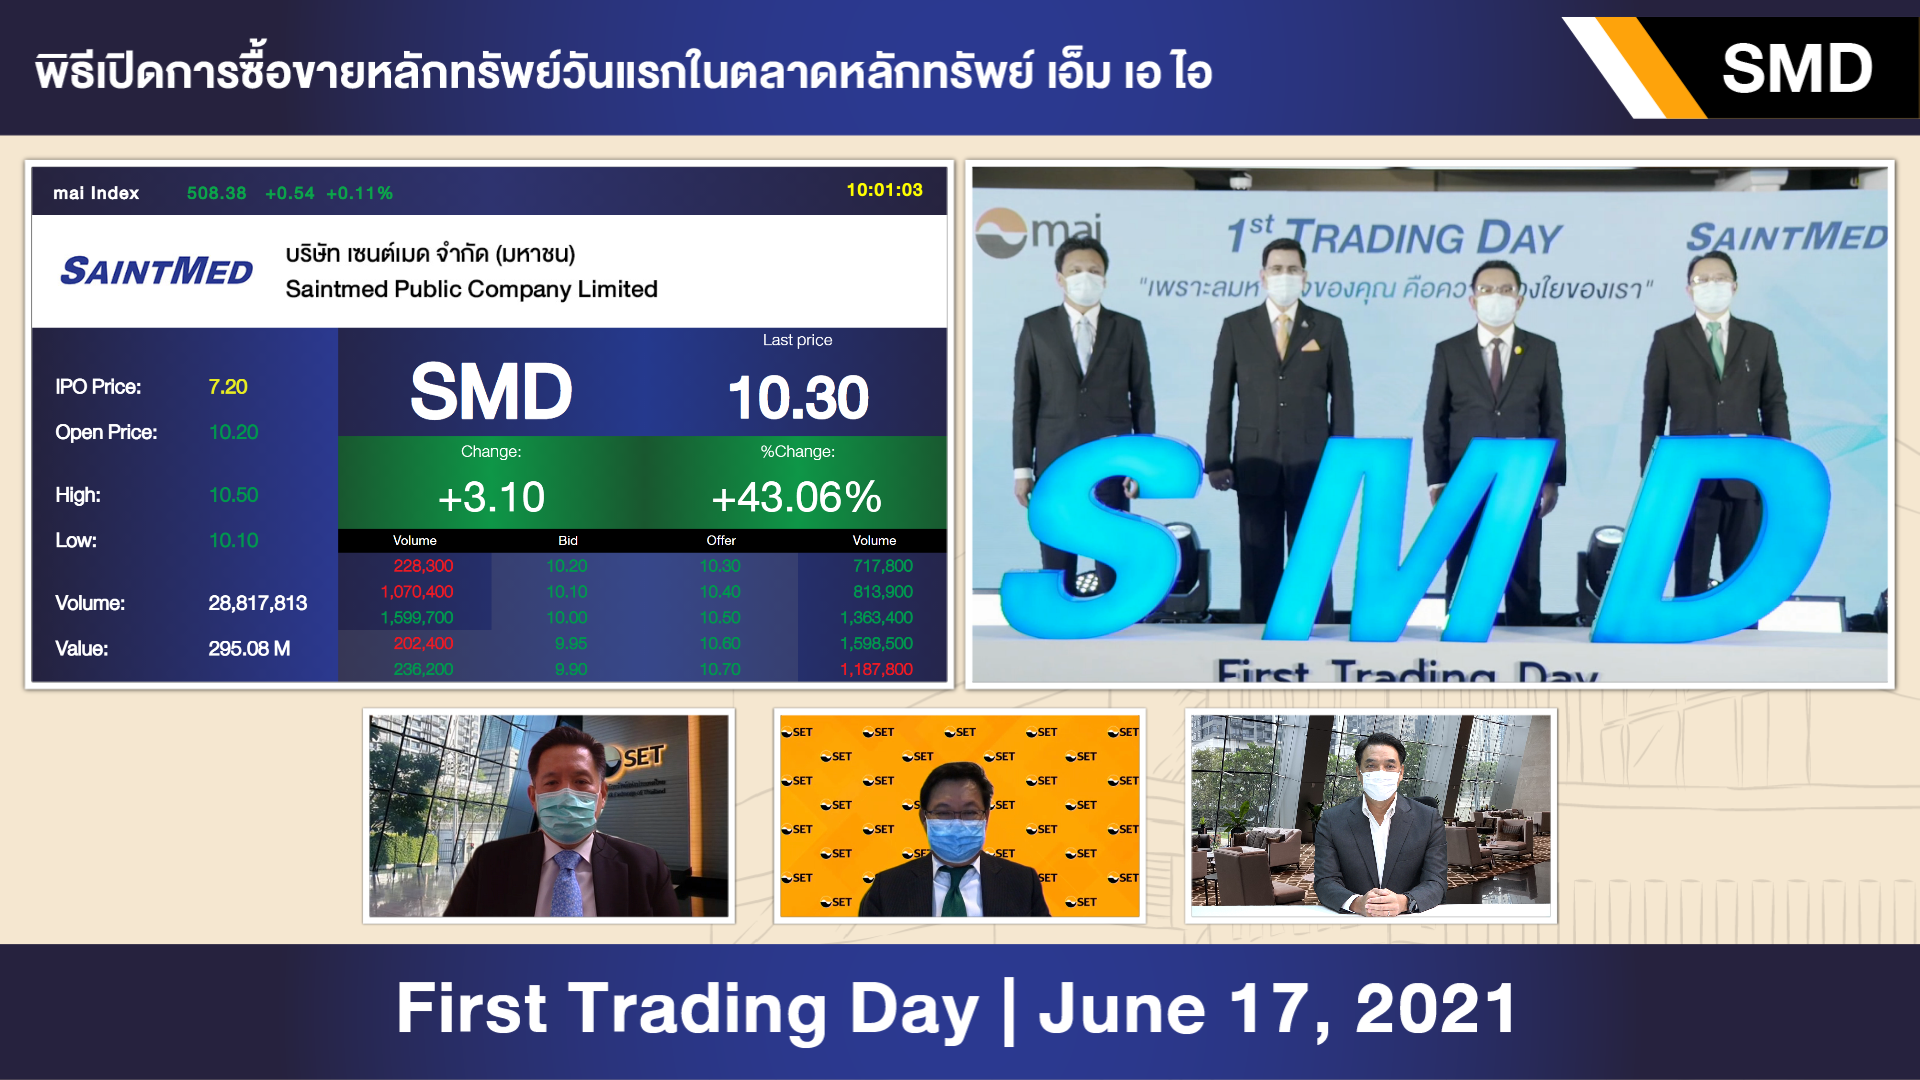 “SMD เริ่มซื้อขายในตลาดหลักทรัพย์ เอ็ม เอ ไอ วันแรก”